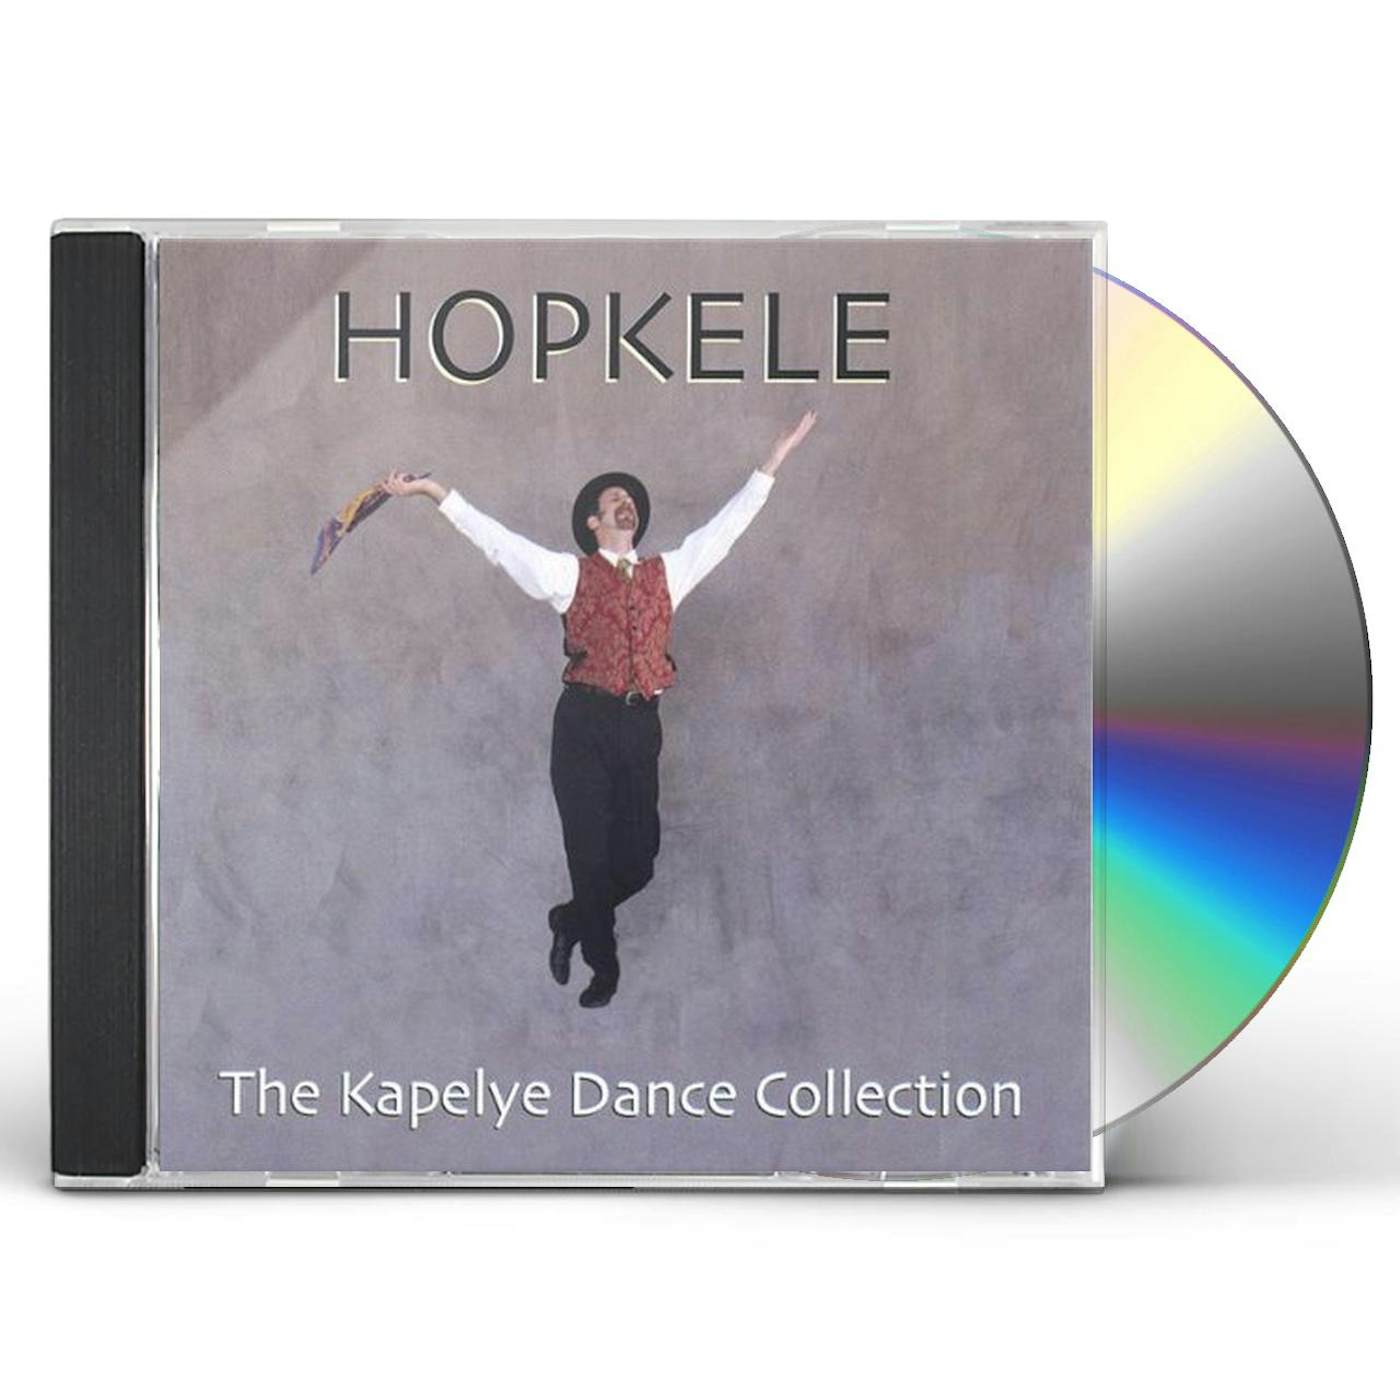 Kapelye HOPKELE CD